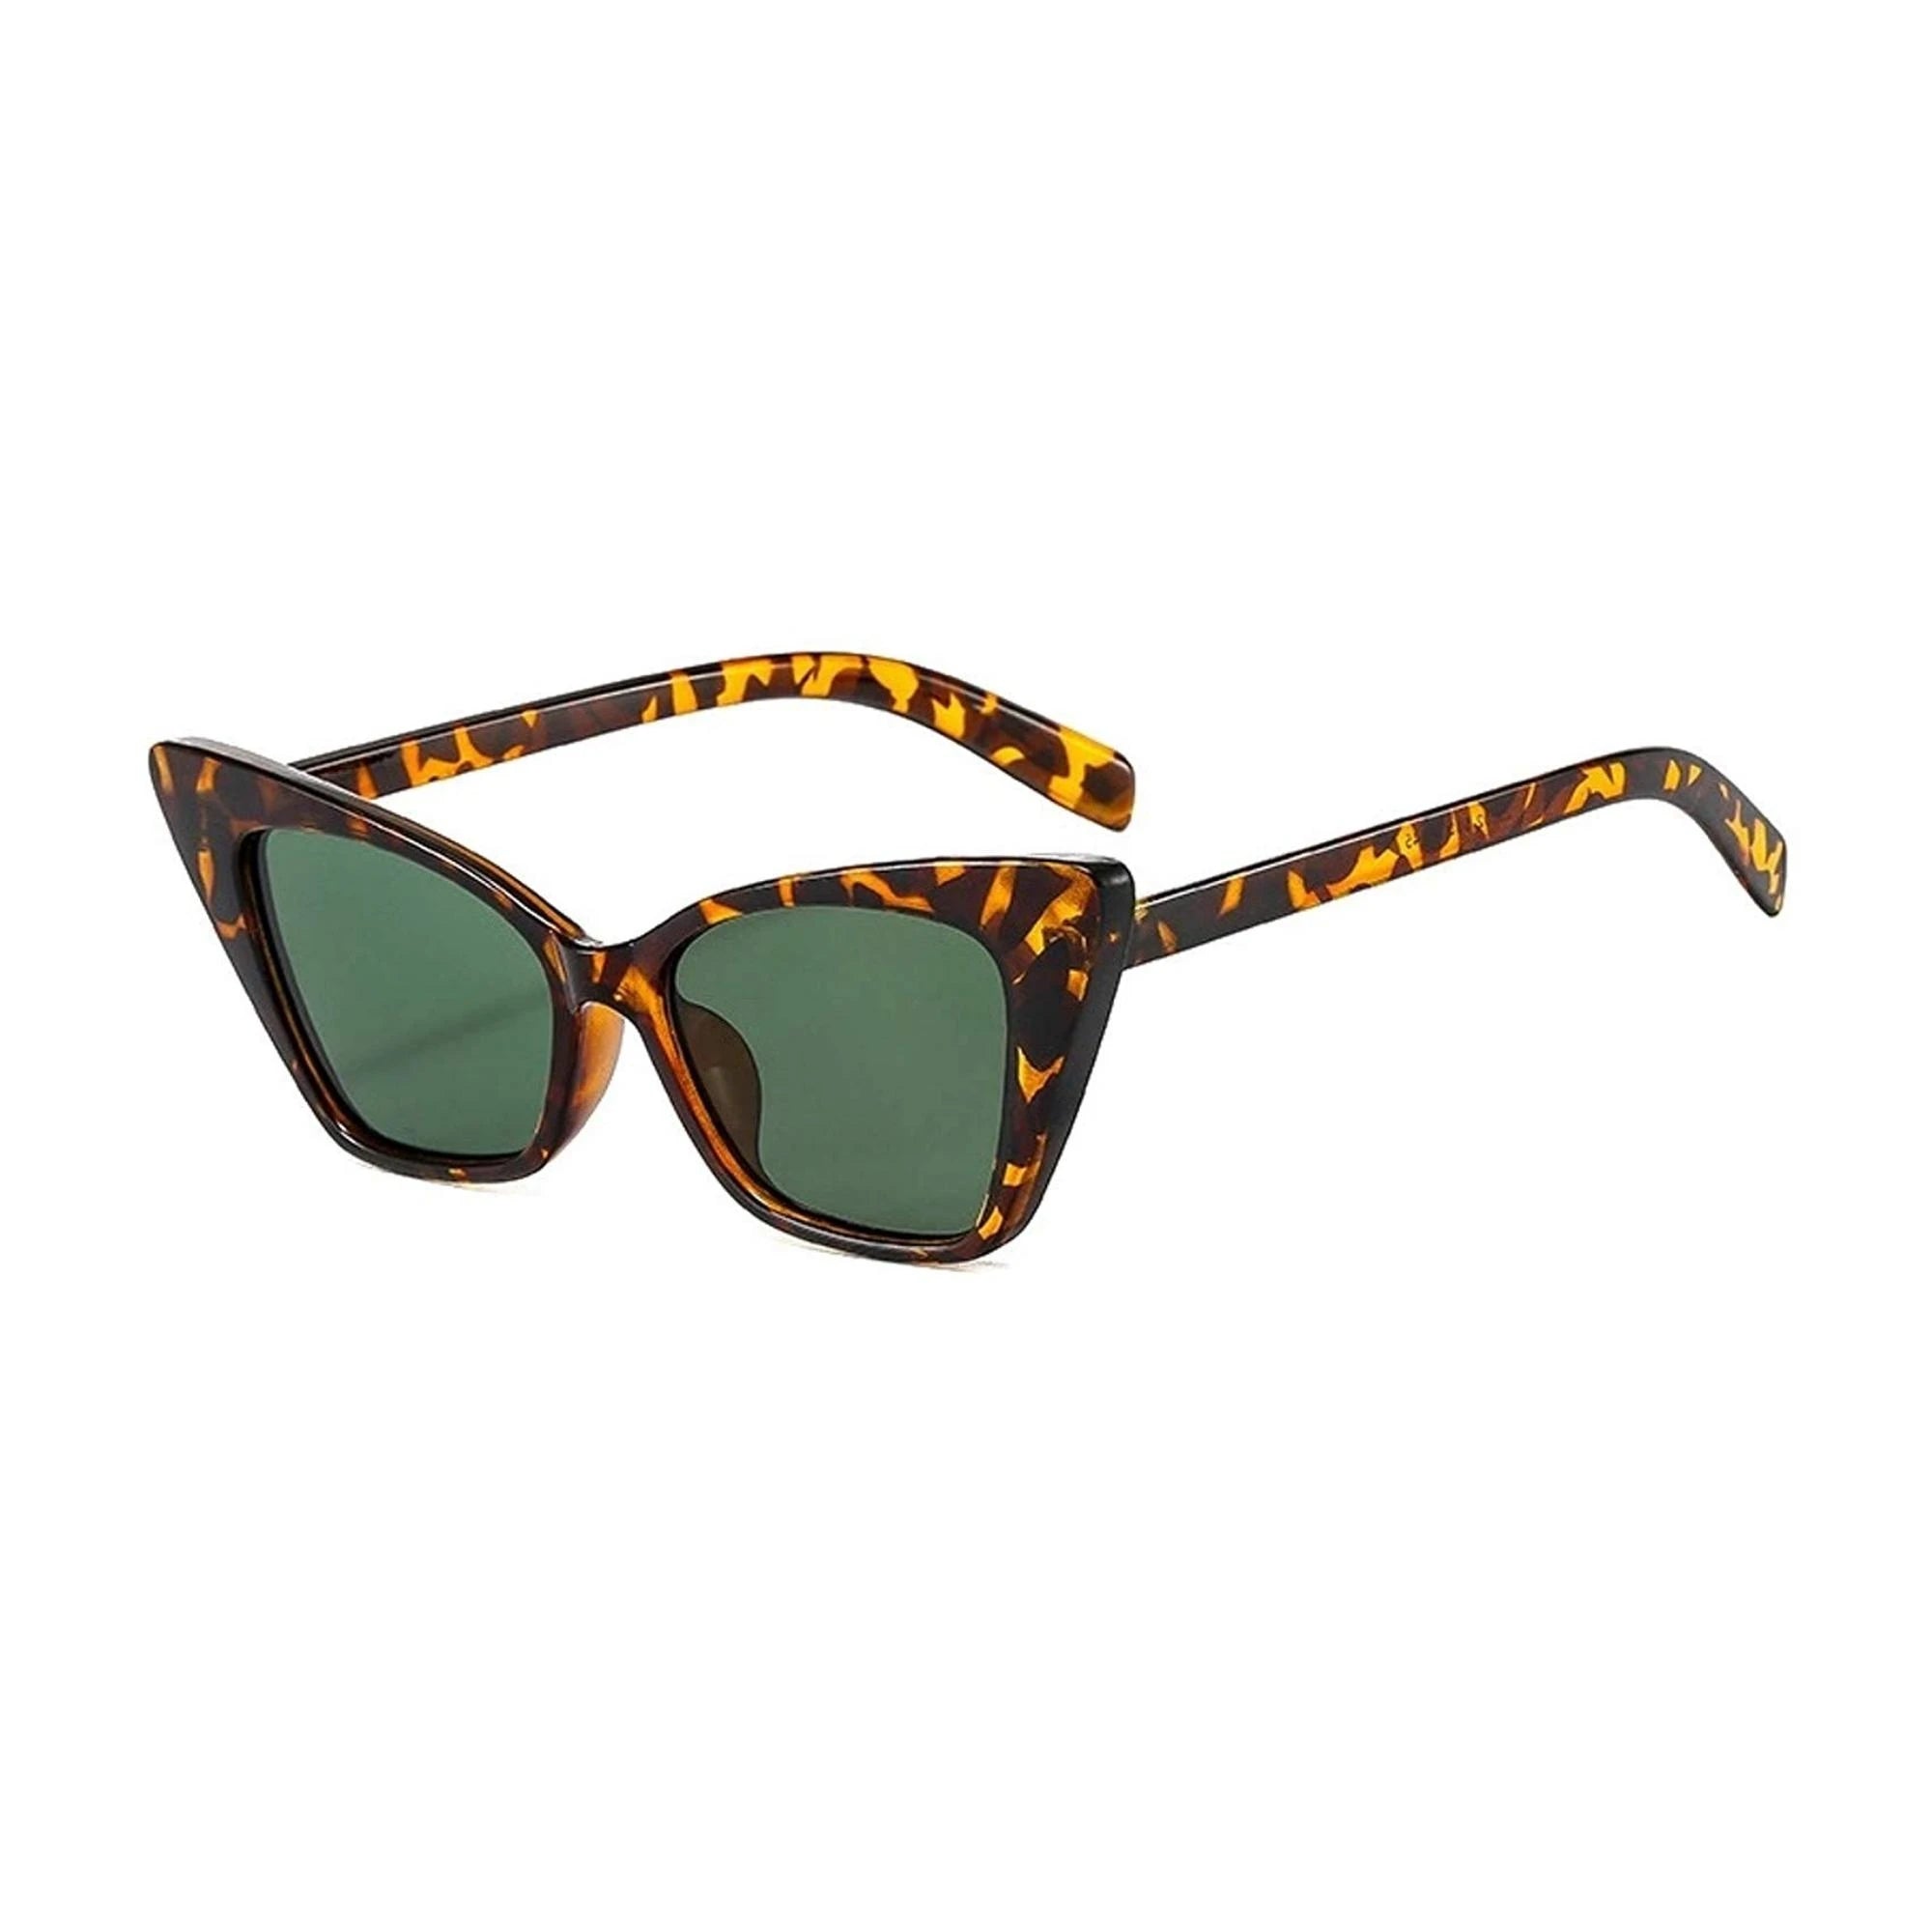 Fame Series Cateye Sunglasses For Women - Leopard Print